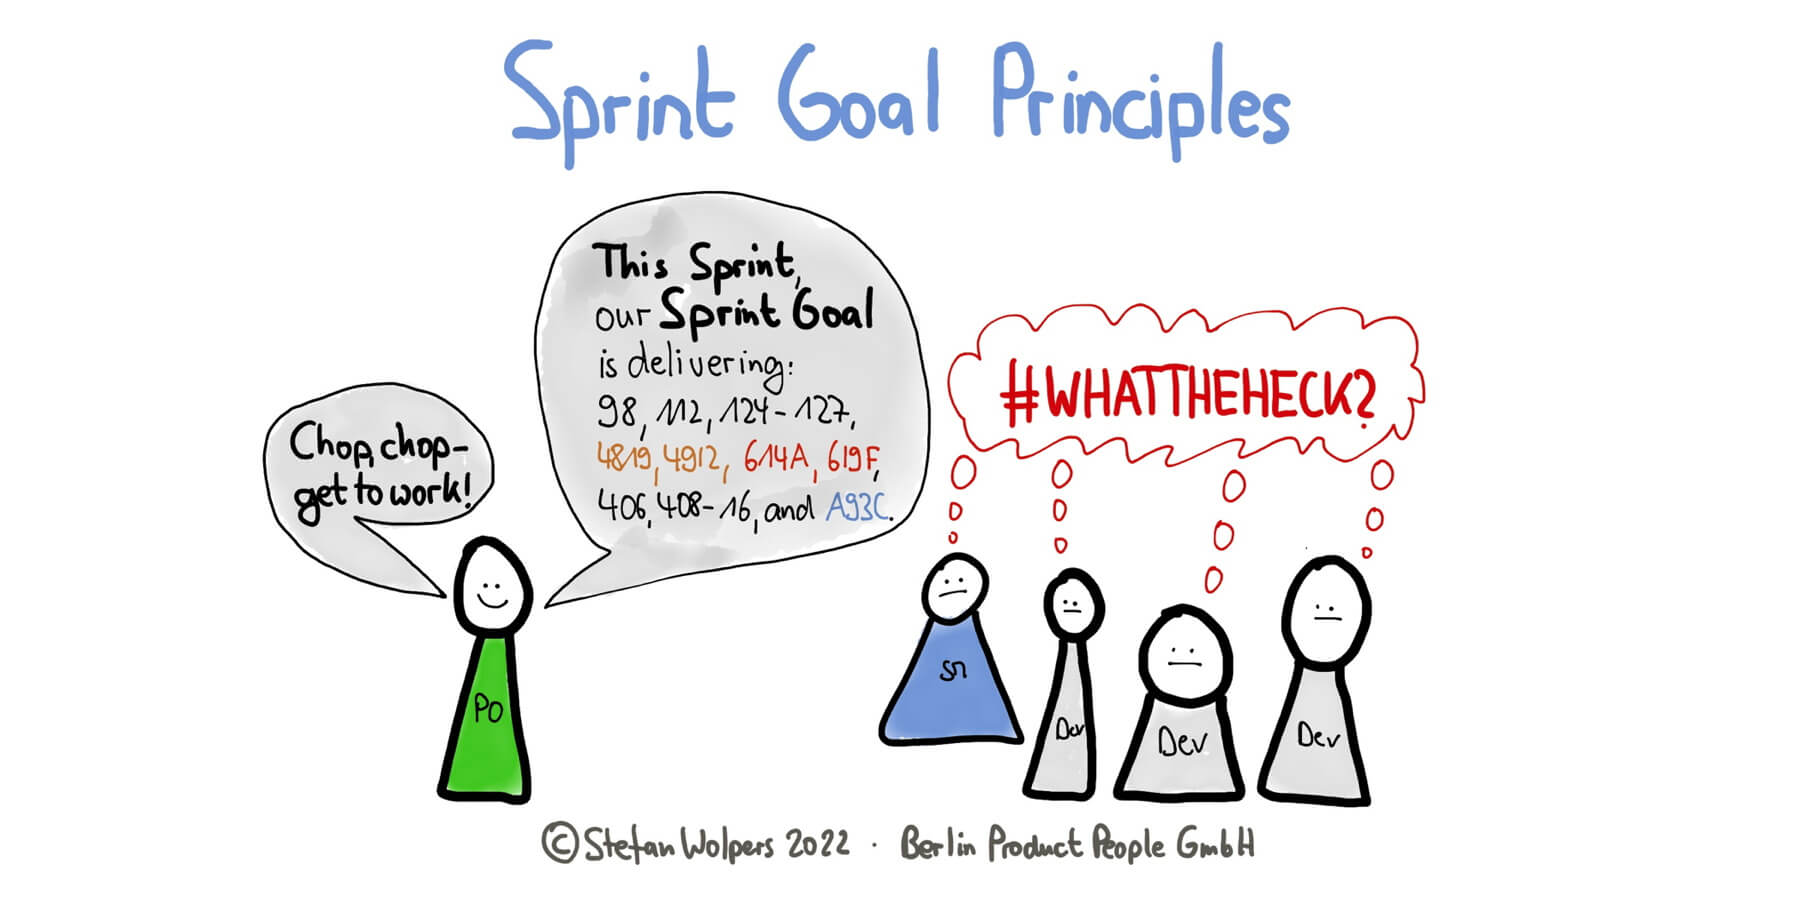 Sprint Goal Principles